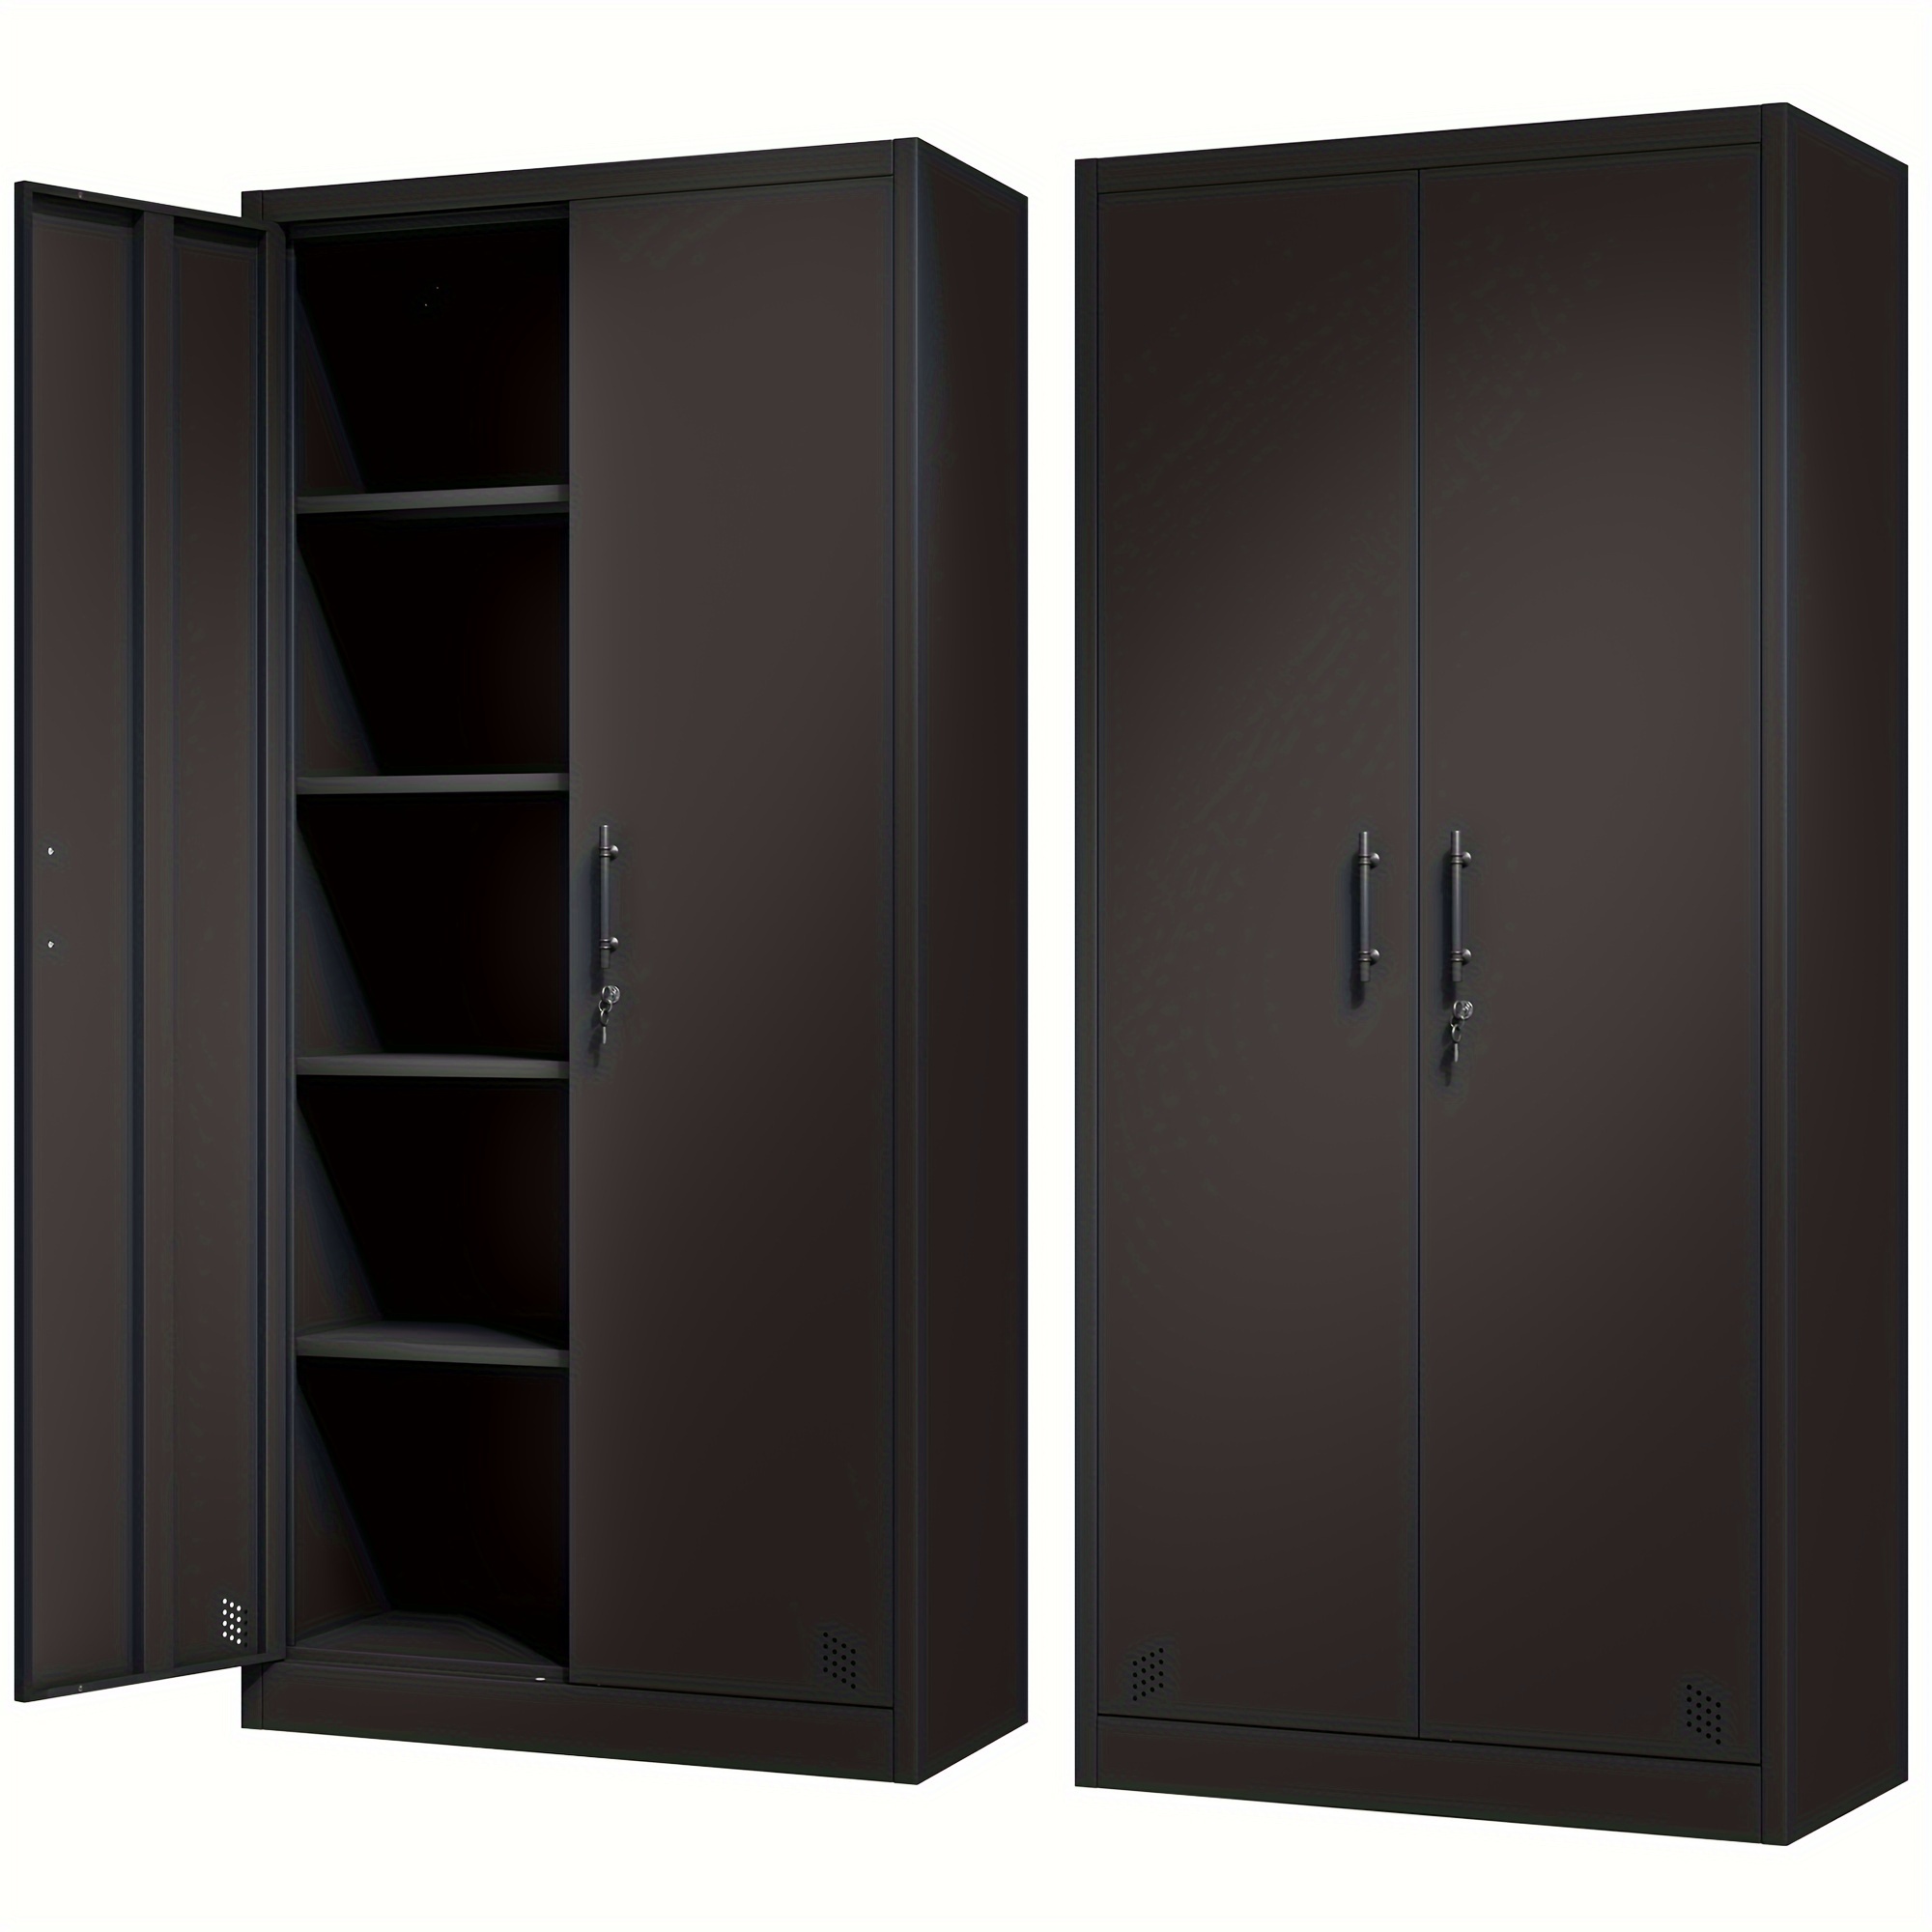 

1pc Metal Storage Cabinet, Steel Storage Cabinet With 2 Doors And 4 Adjustable Shelves, Black Metal Cabinet With Lock, 72"tall Steel Storage Cabinet